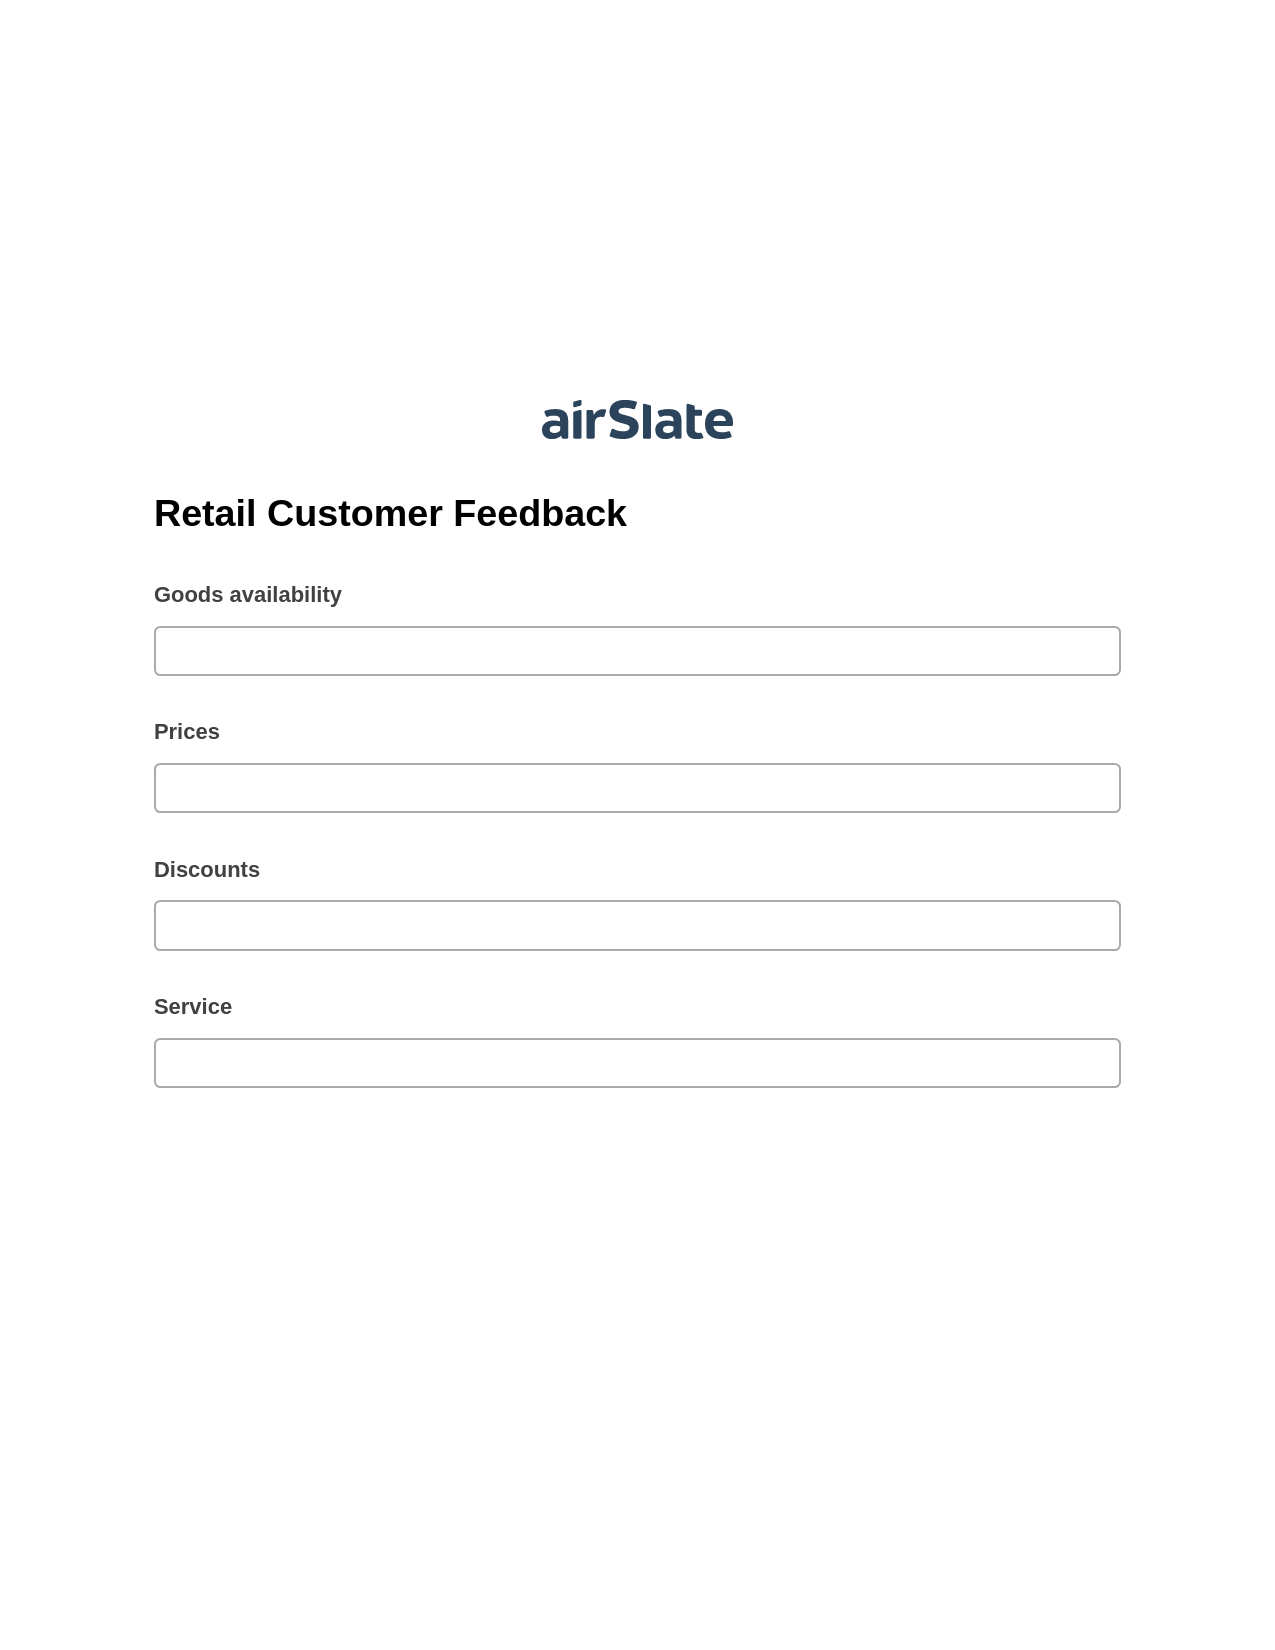 Multirole Retail Customer Feedback Pre-fill from CSV File Bot, Lock the slate bot, Dropbox Bot